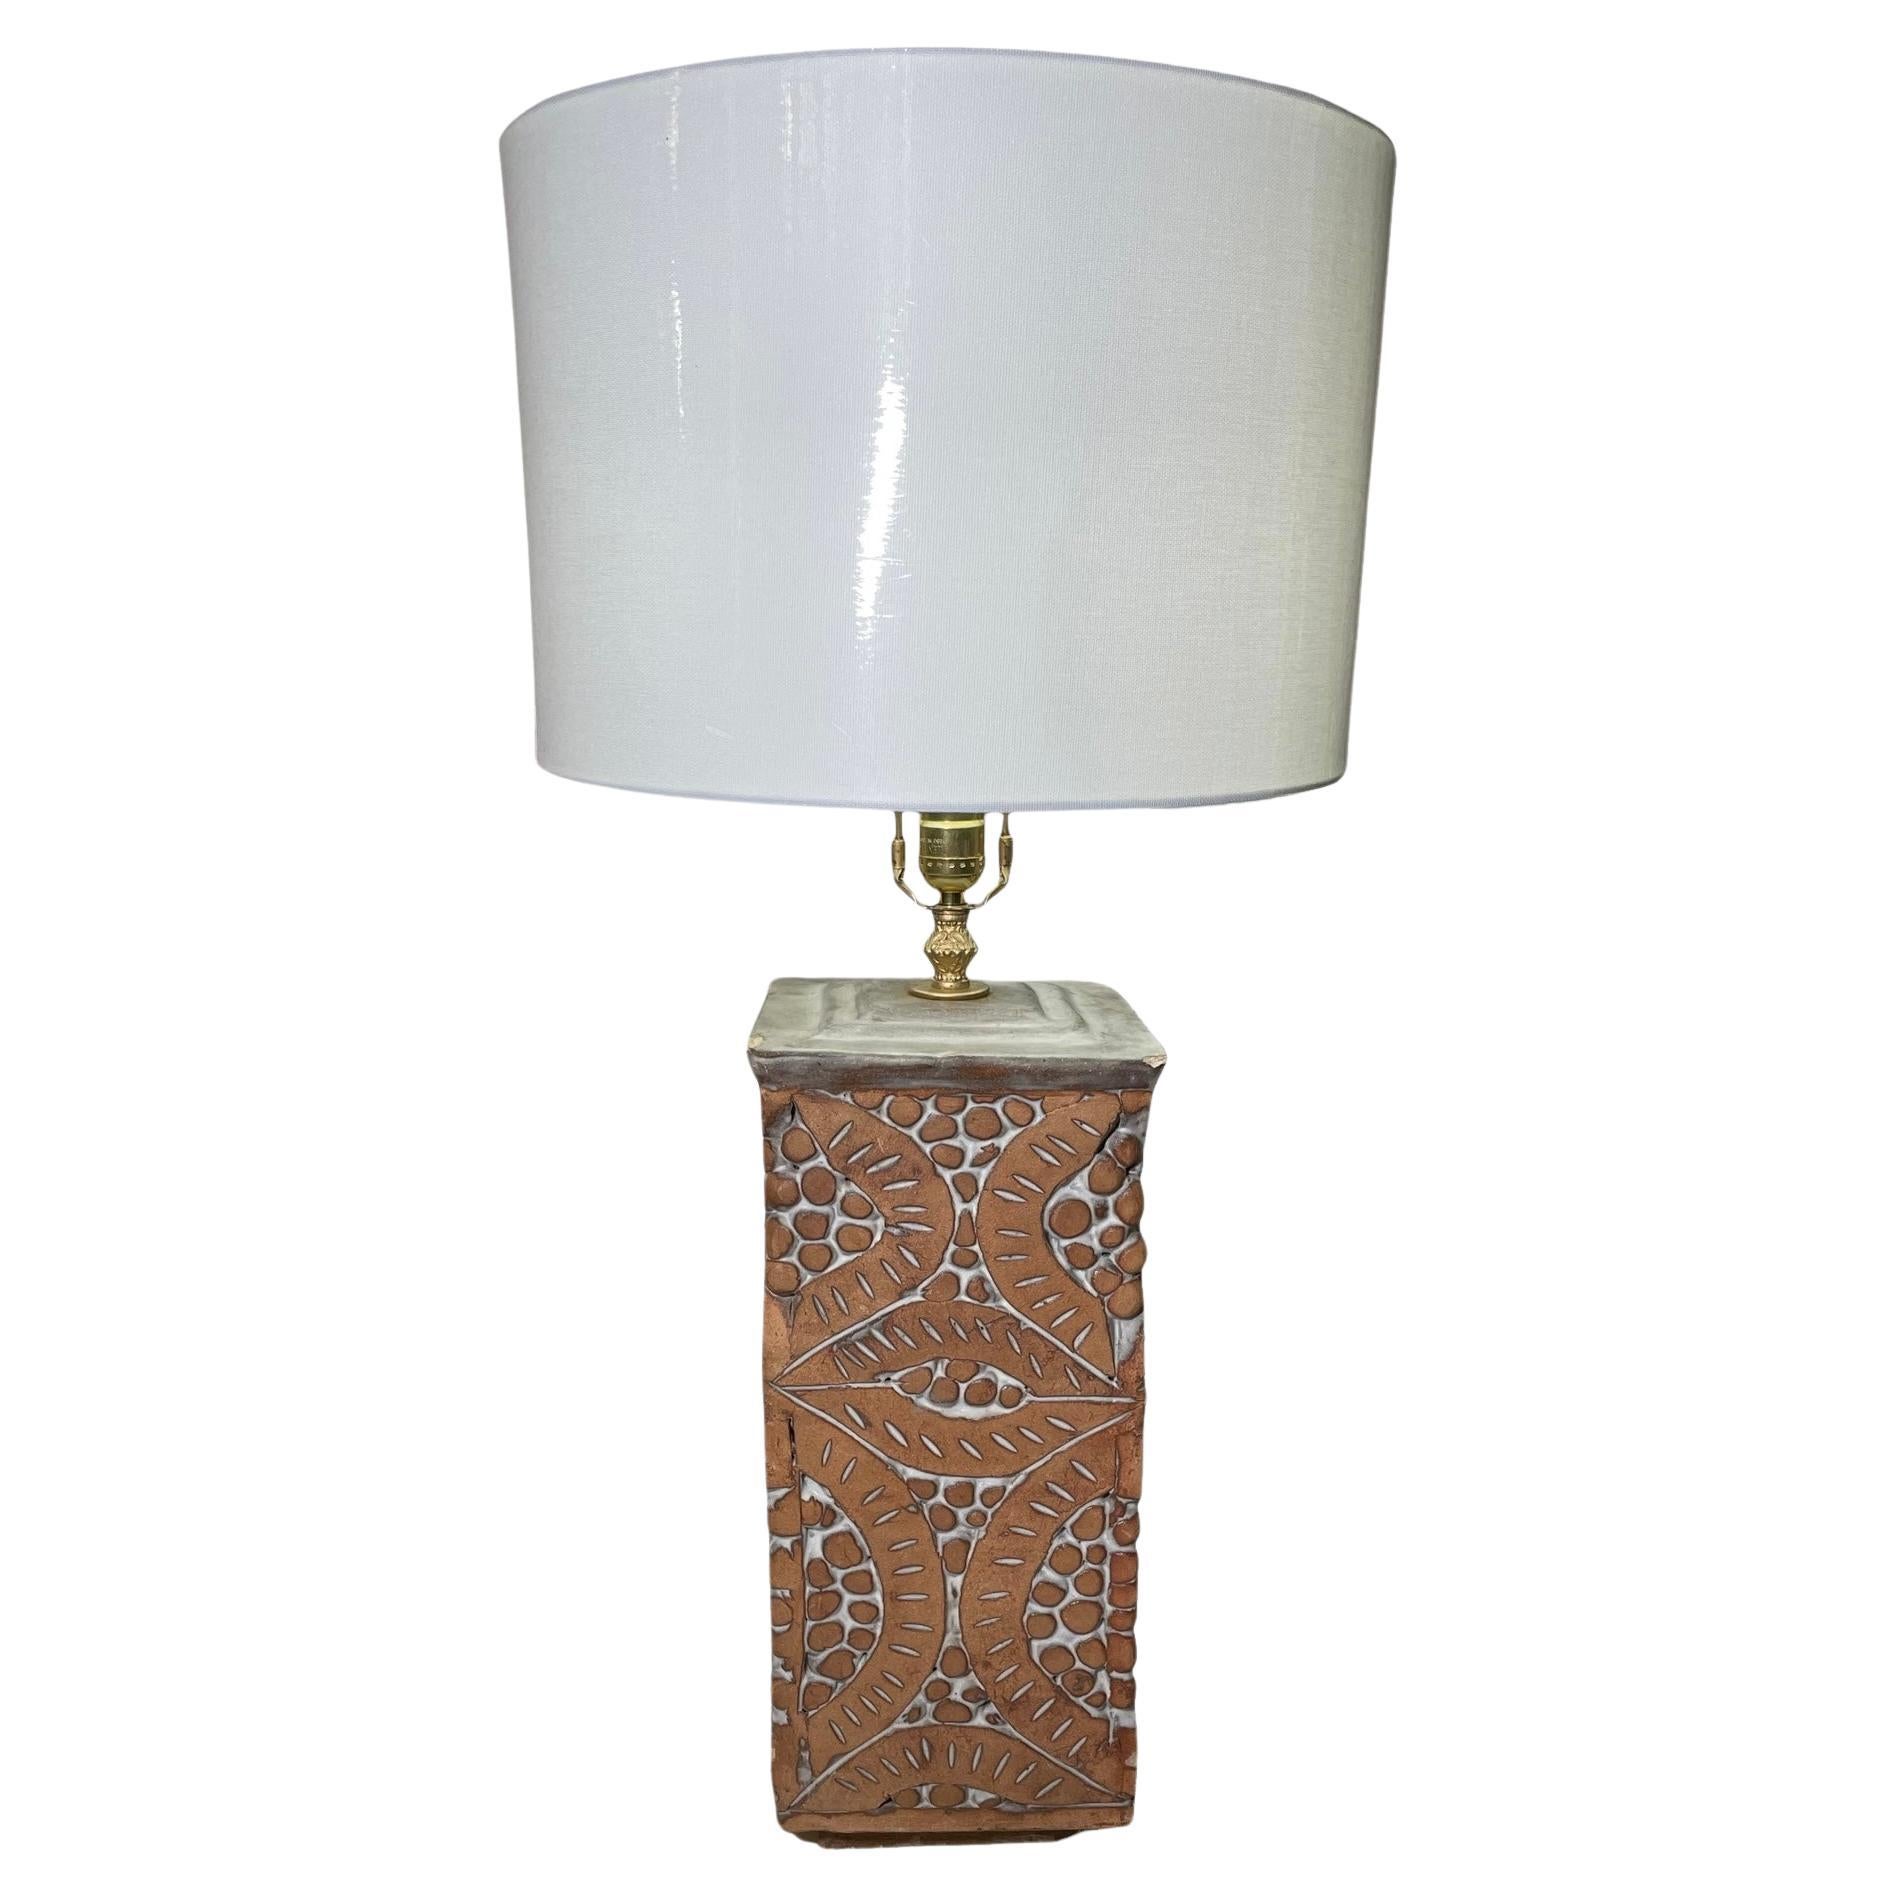 Isla Del Sol Table Lamp For Sale